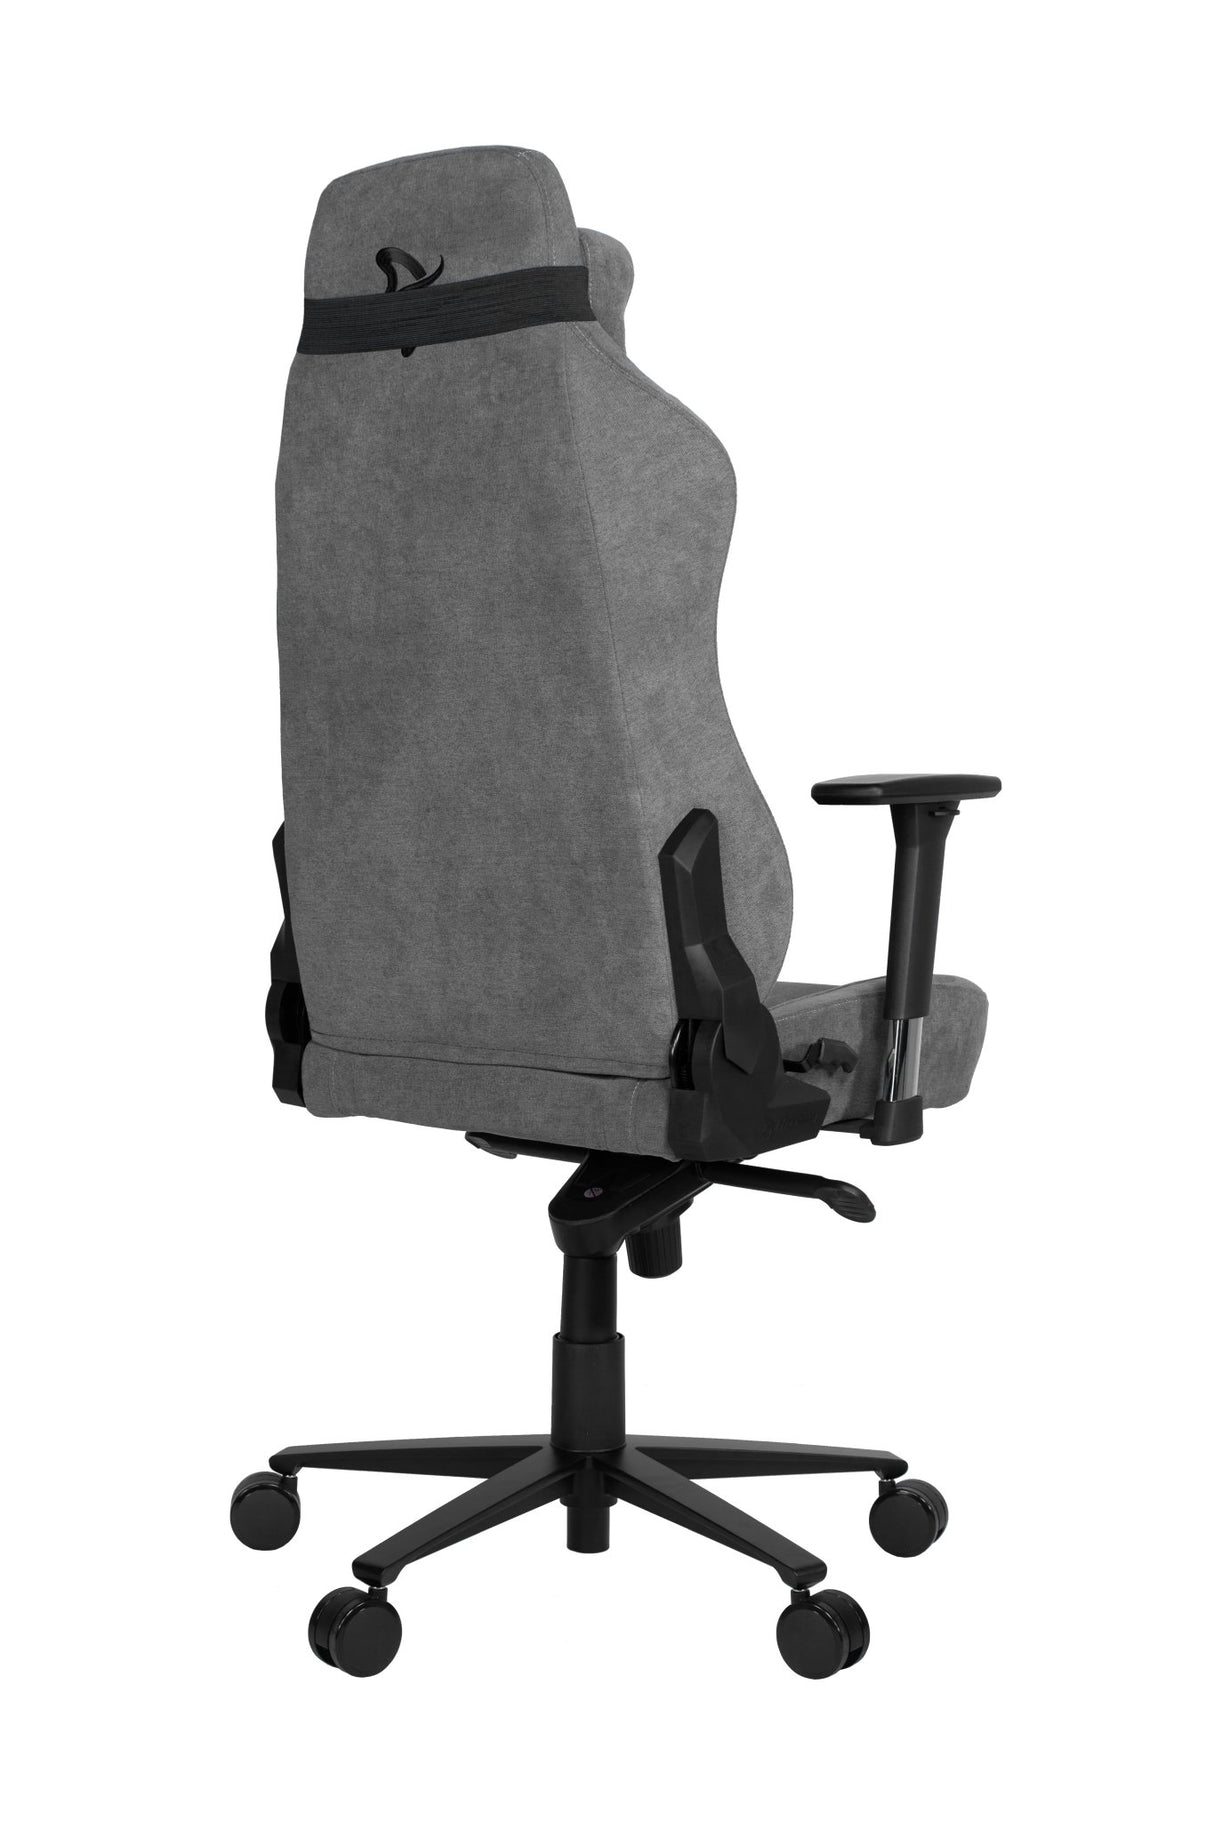 Arozzi Vernazza Soft Fabric - Ash - Level UpArozziGaming Chair0769498680025